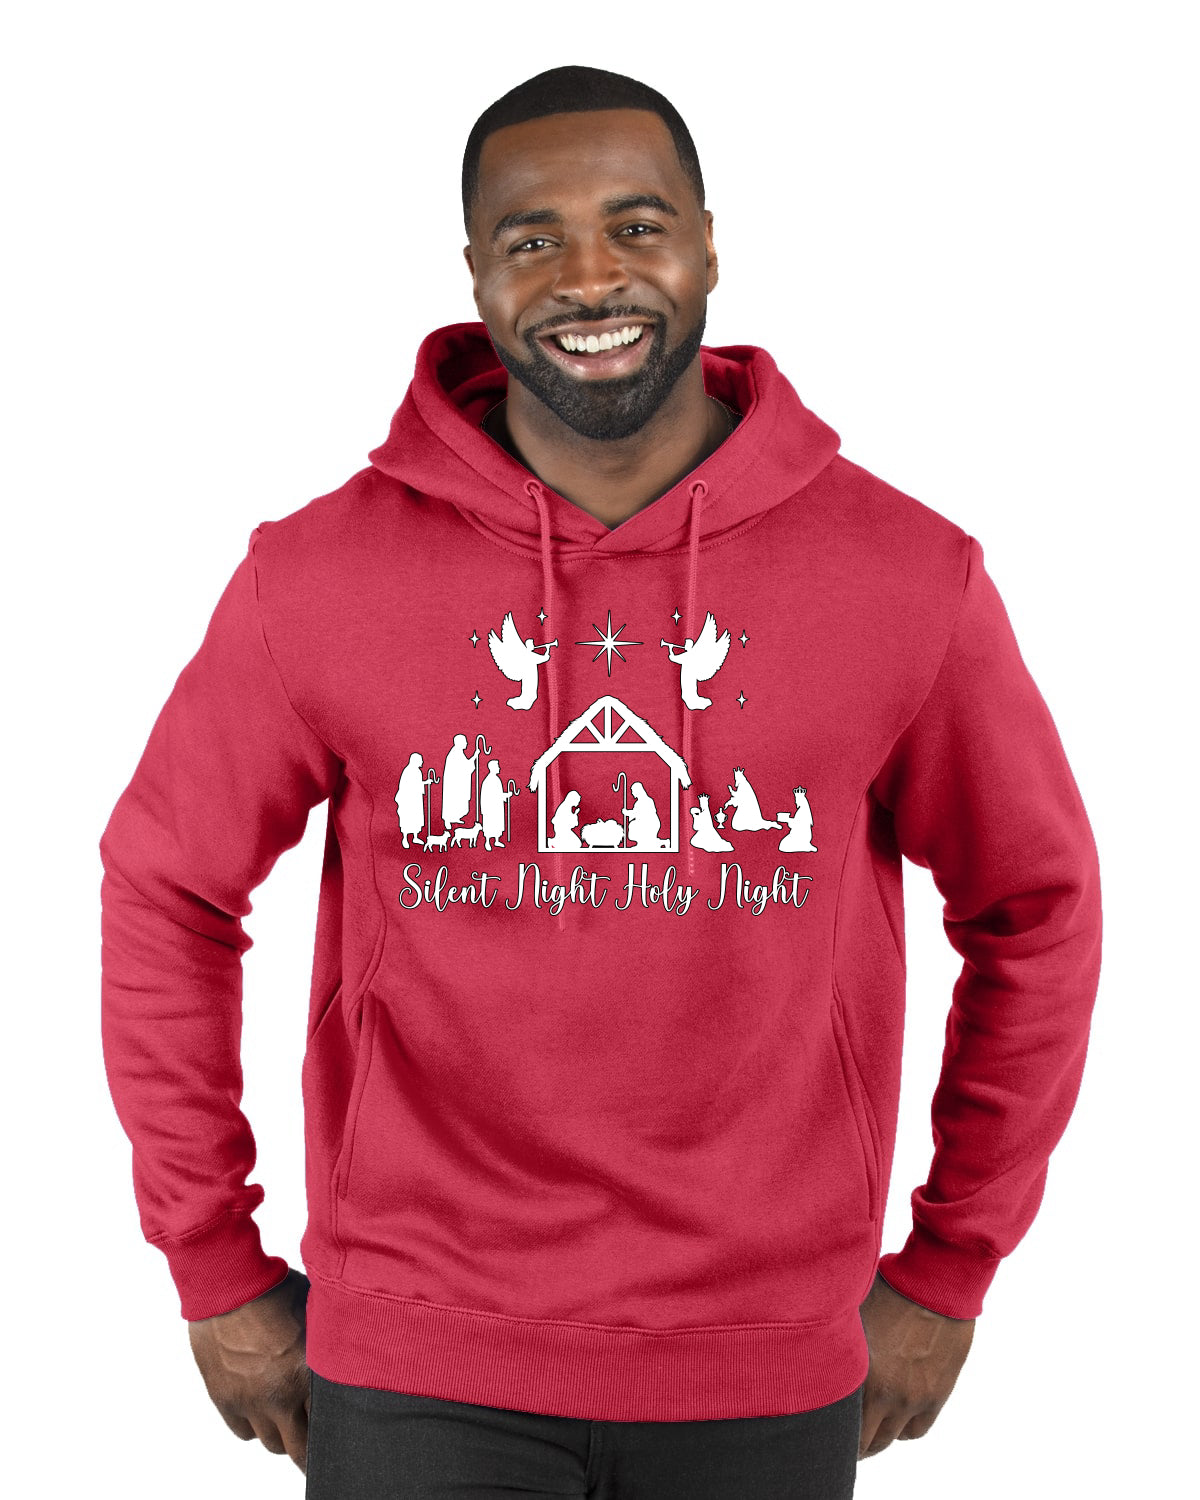 Silent Night Holy Night Religious Jesus Christmas Premium Graphic Hoodie Sweatshirt